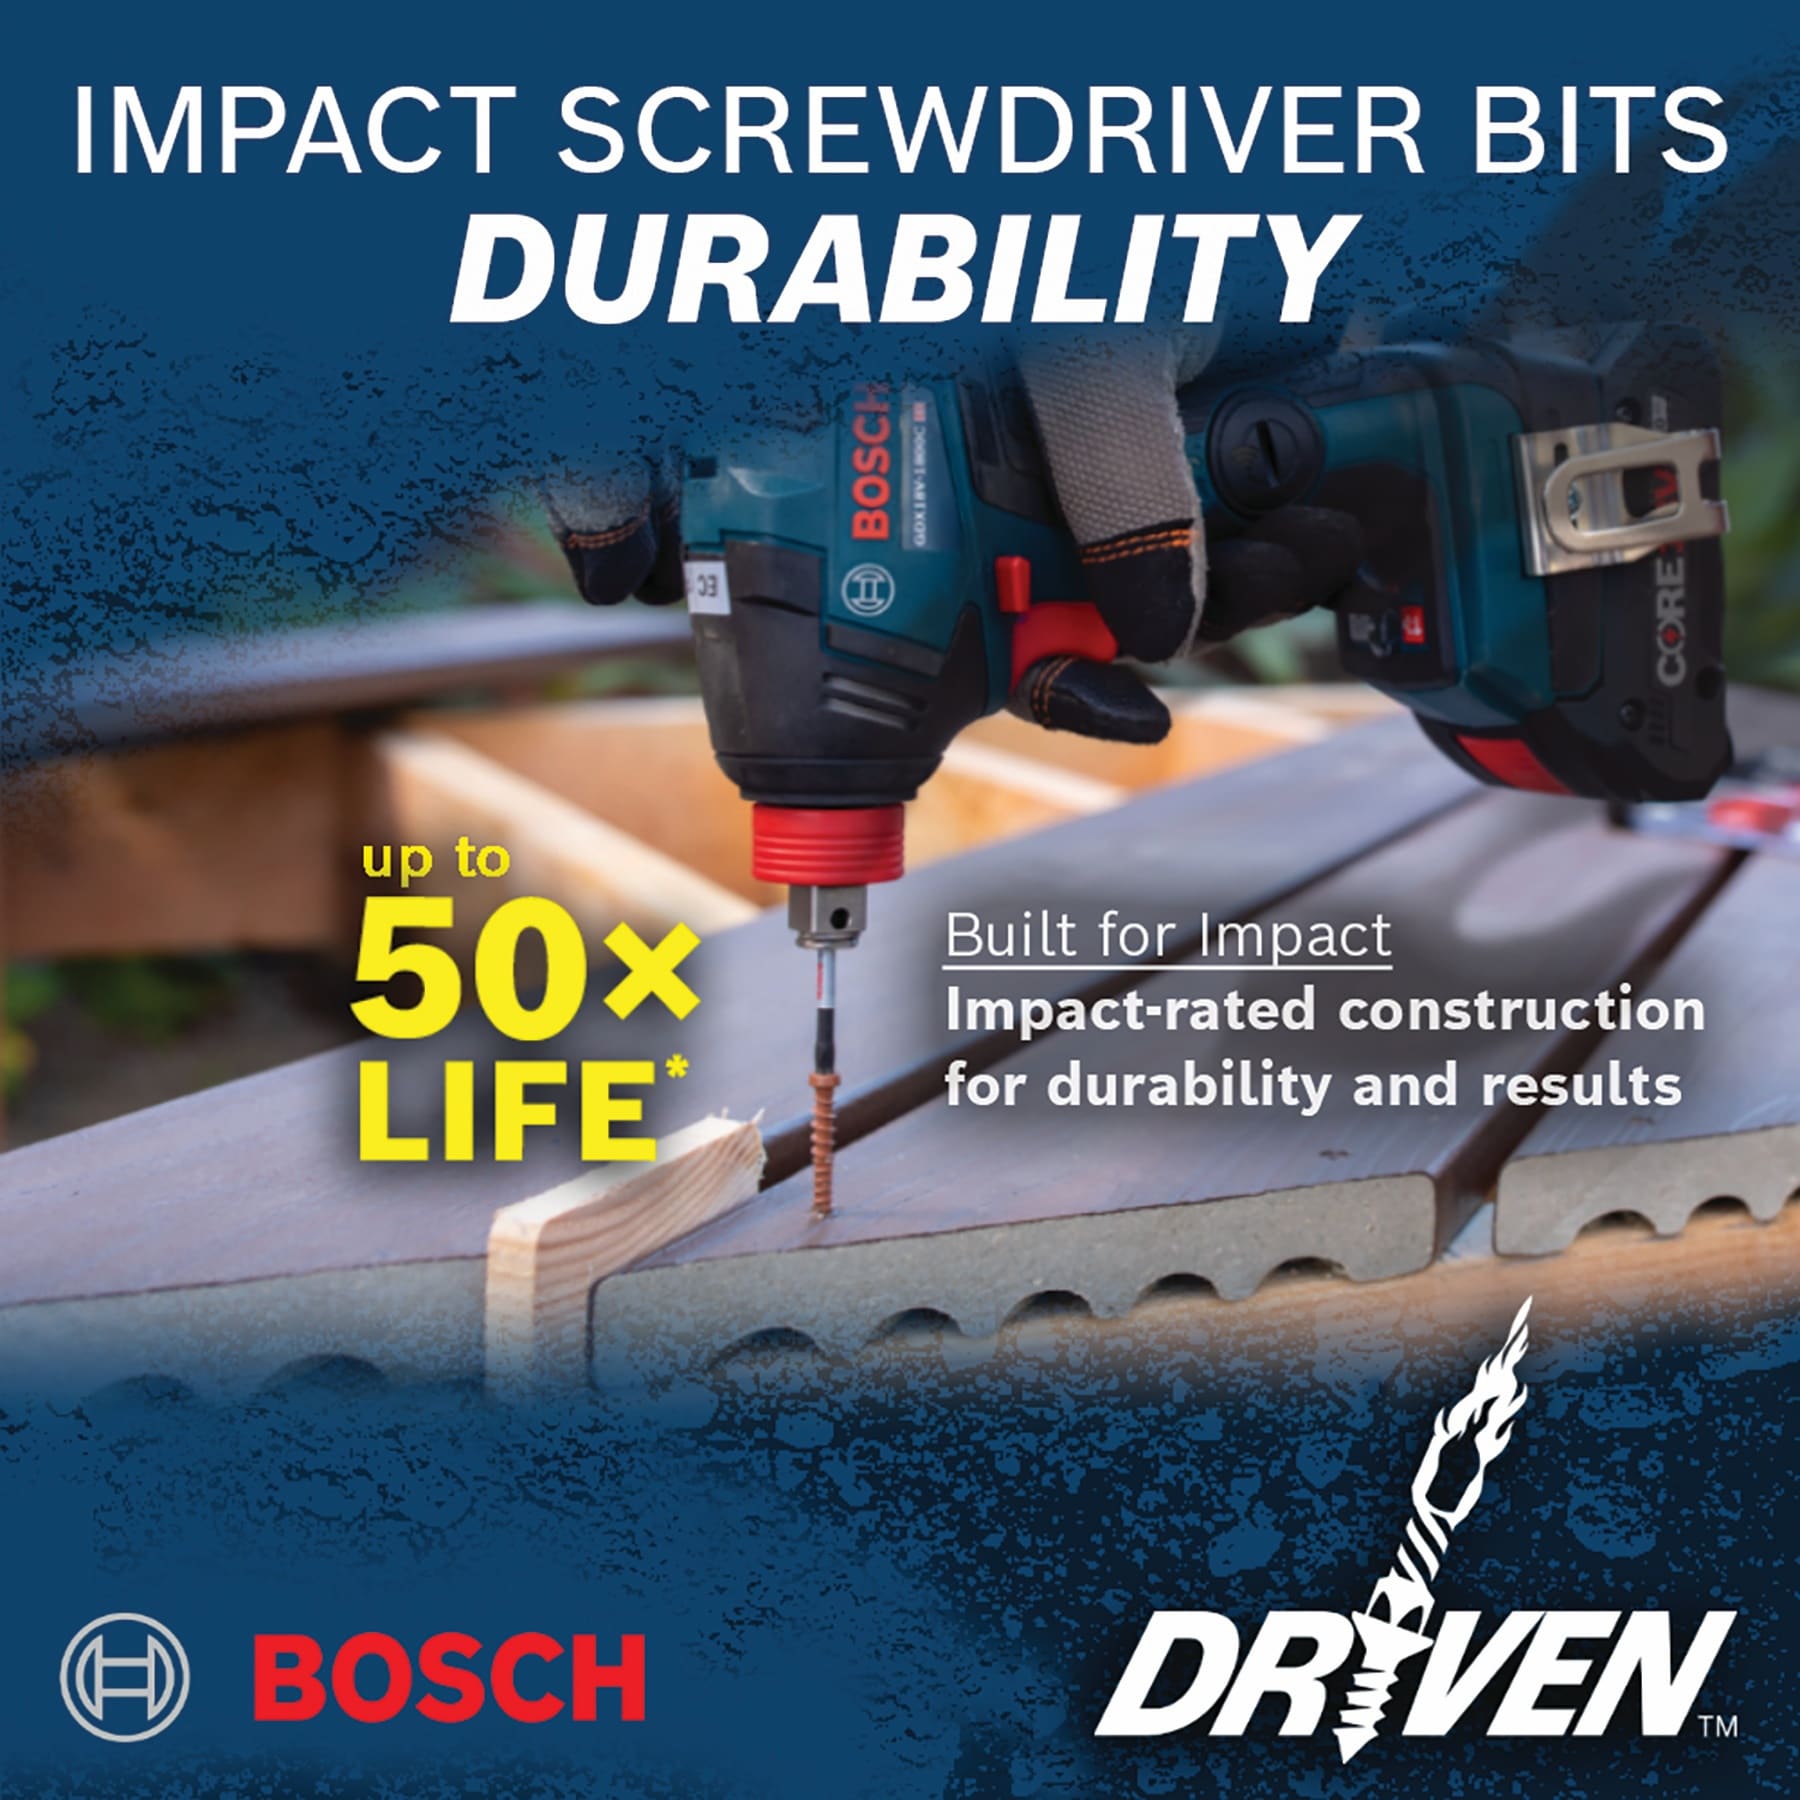 Bosch Impact Control 35 Piece Drill and Screwdriver Bit Set